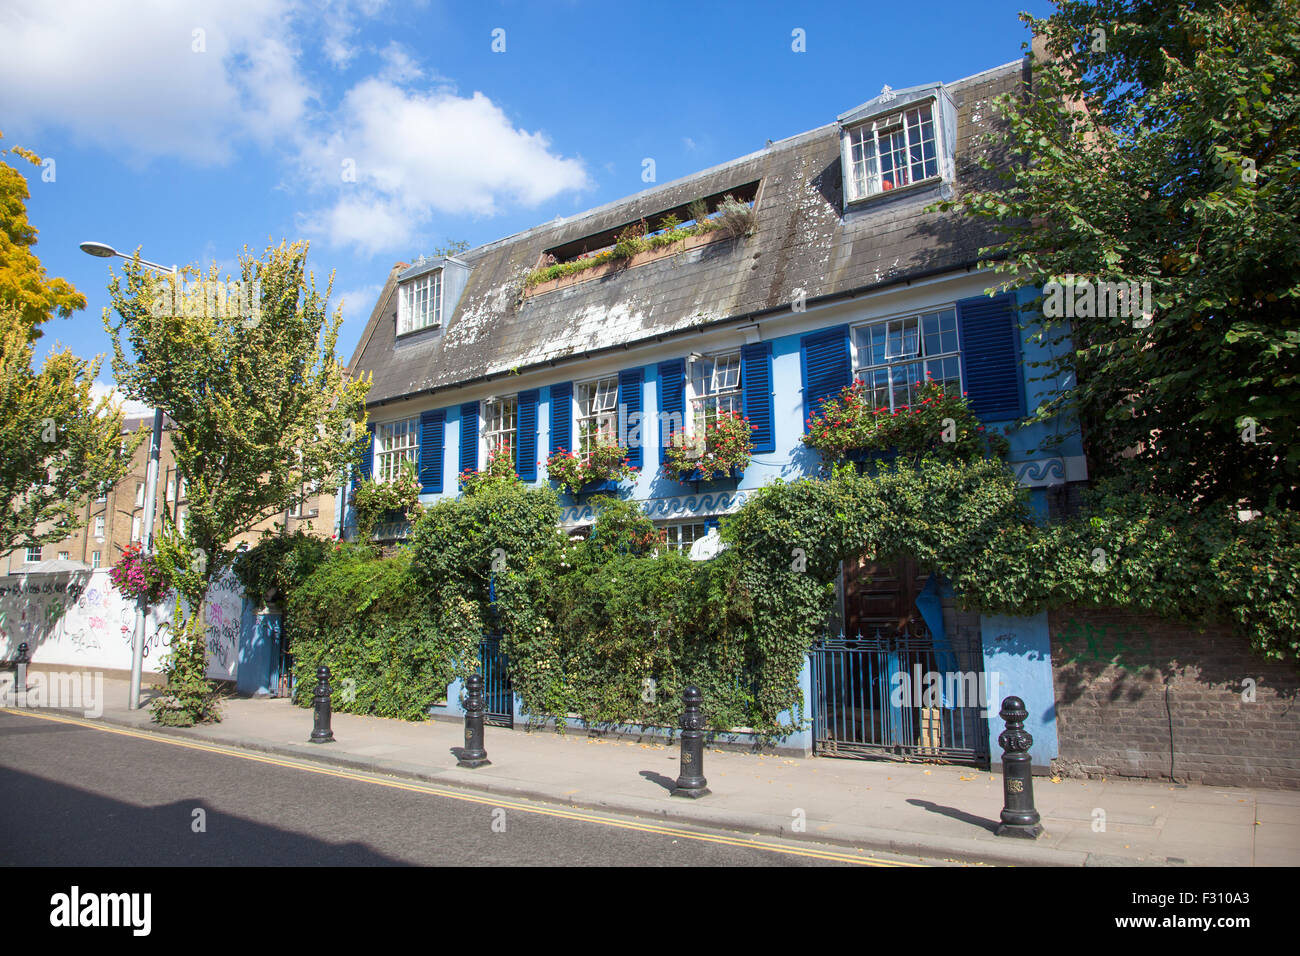 The Blue House of Portobello, London, England Stock Photo